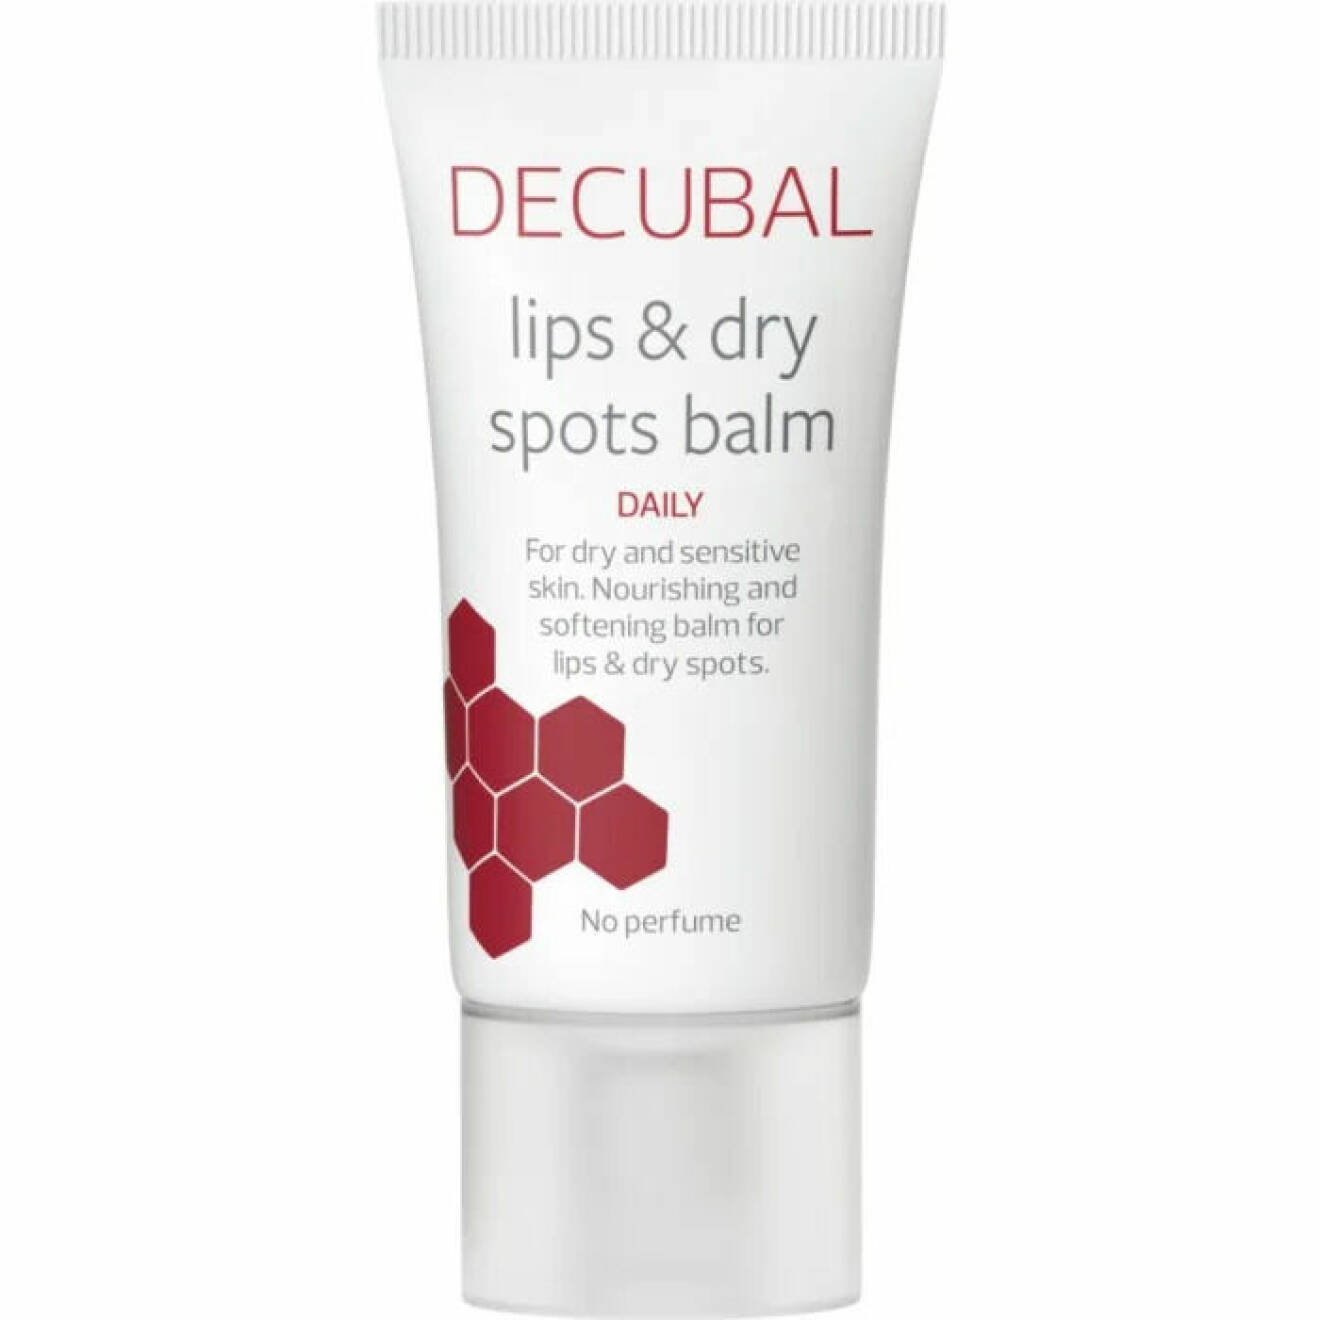 Decubal lips and dry spots balm